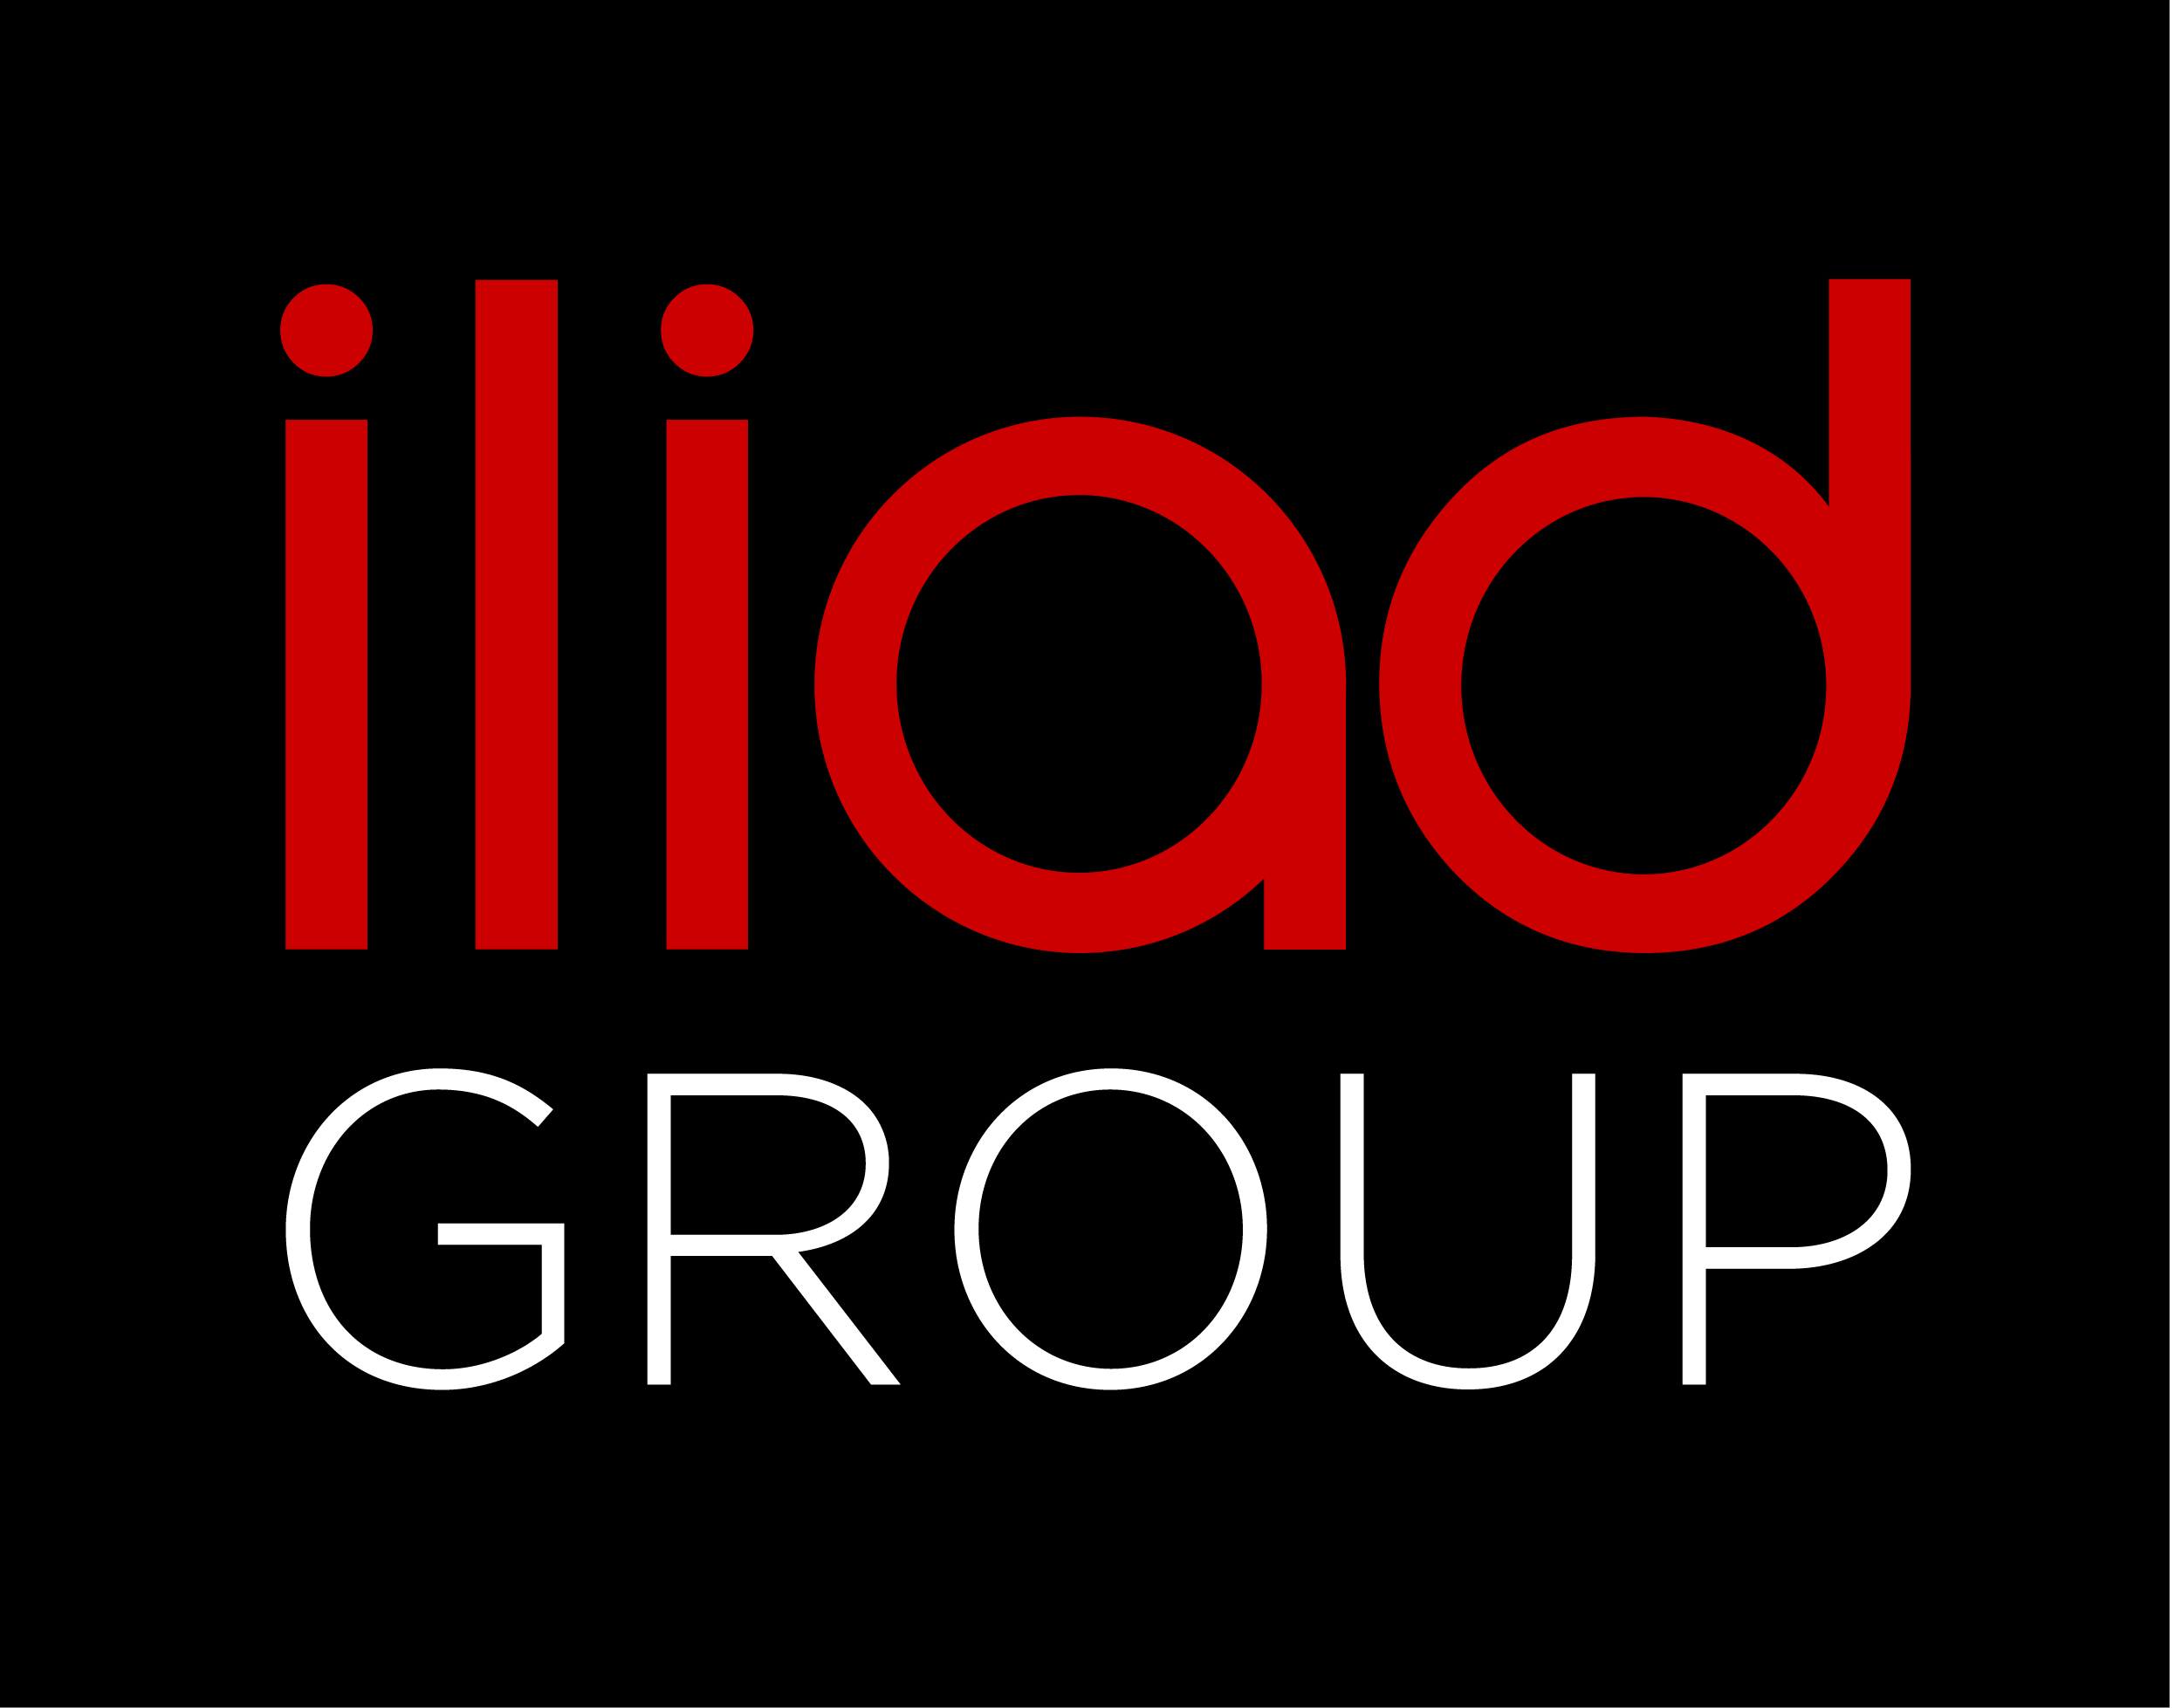 iliad, the Group issued a 500 million euro bond